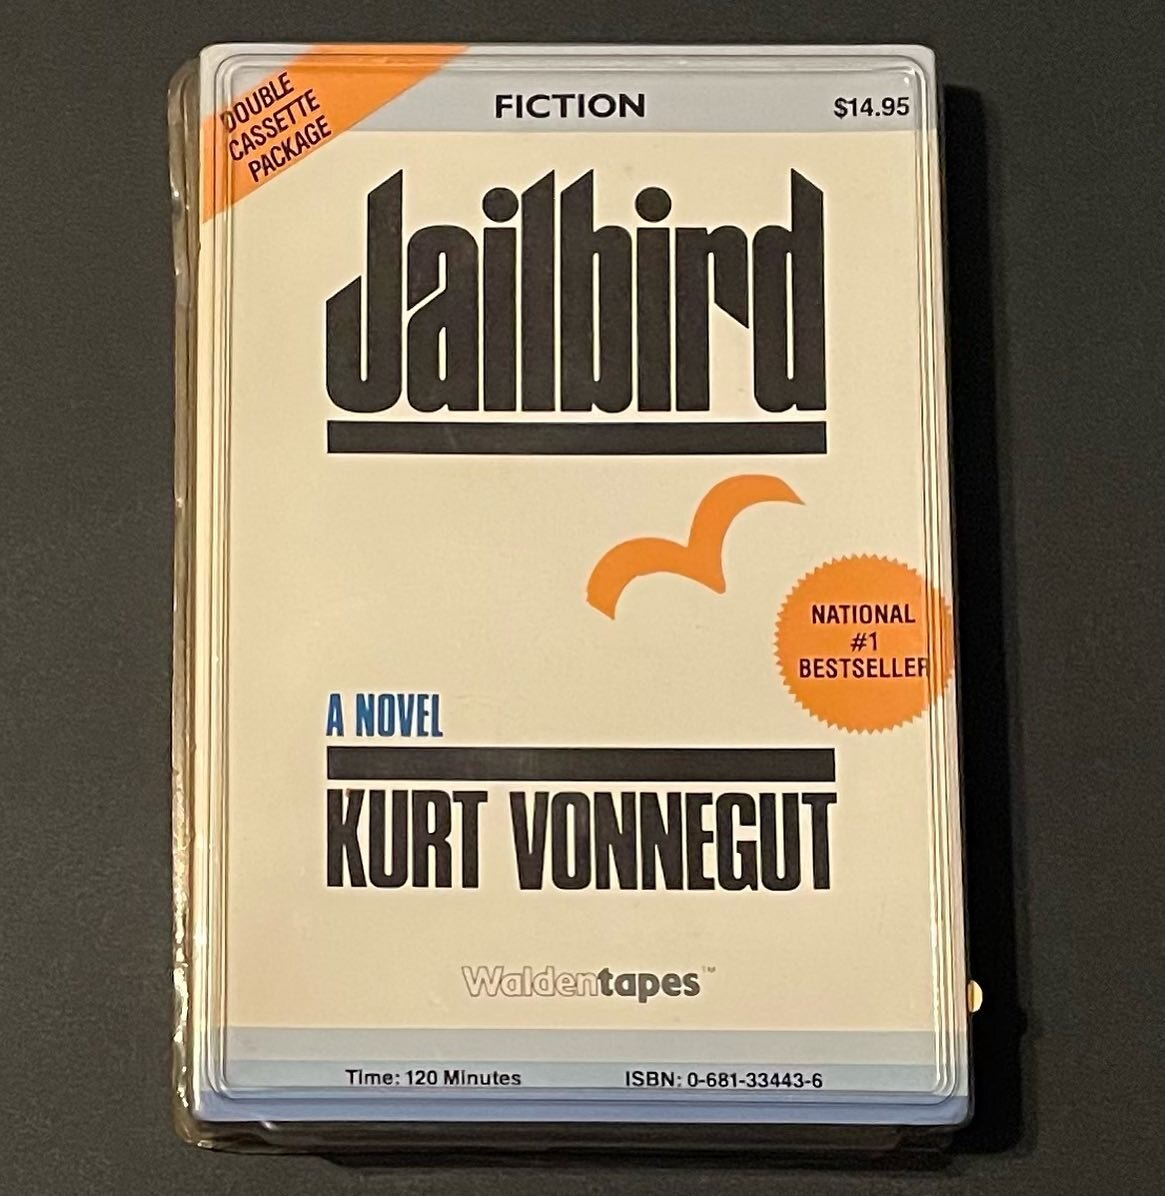 📚
𝙅𝙖𝙞𝙡𝙗𝙞𝙧𝙙 &mdash; Cassette Tape Abridged Audiobook | Sealed/Unopened &mdash; Walden Tapes, 1980
#KurtVonnegut
#BookCollection
#Jailbird
#Bookstagram
📚